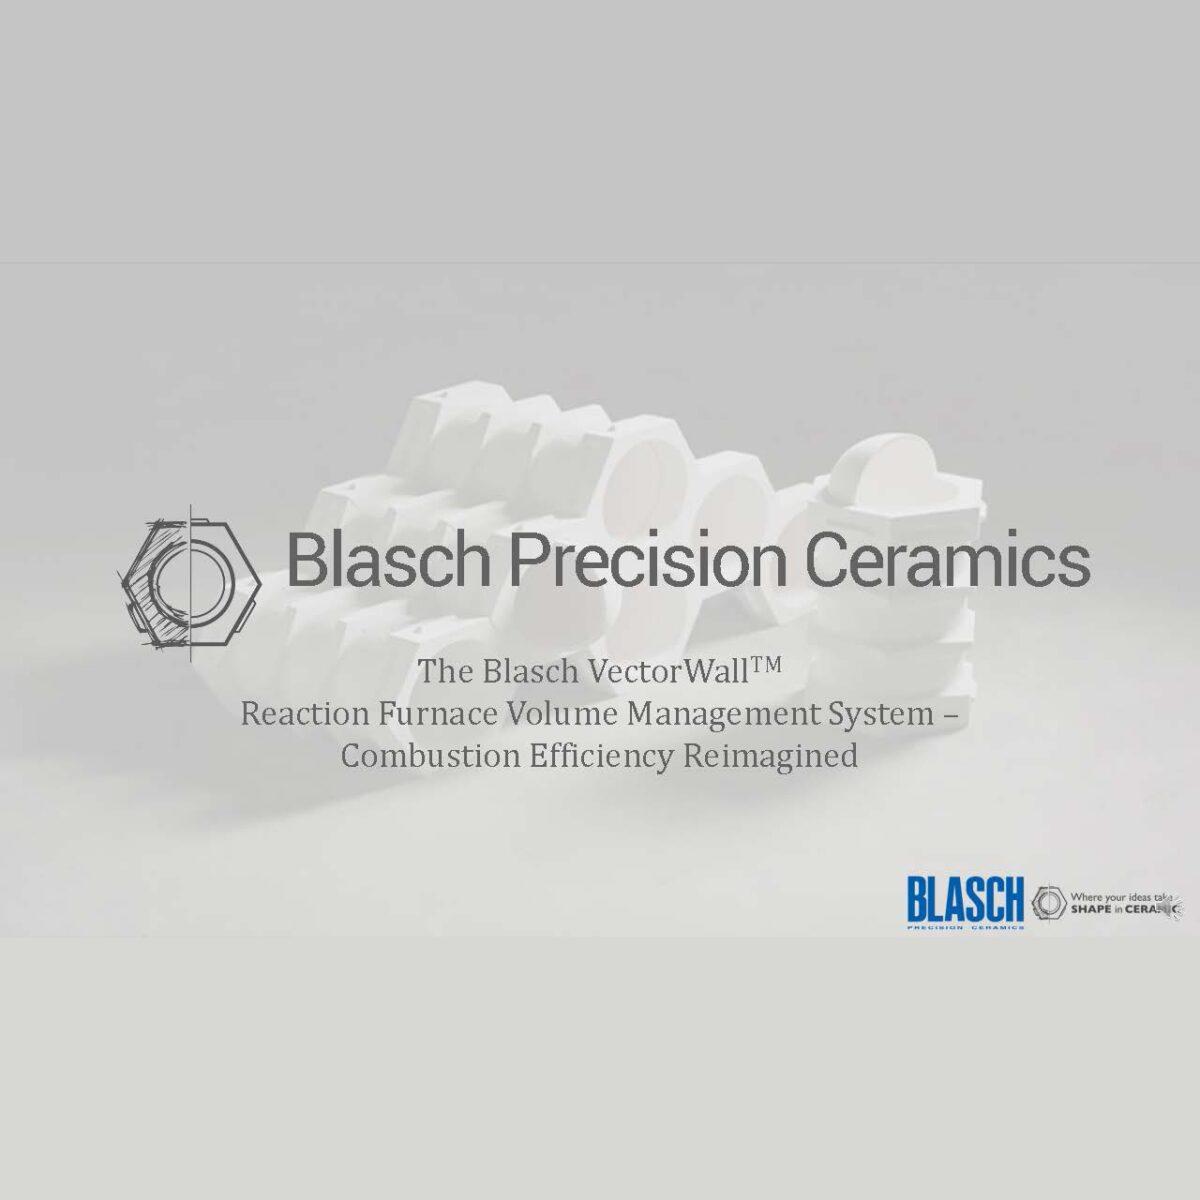 A webinar title card: Blasch Precision Ceramics - The Blasch VectorWall Reaction Furnace Volume Management System - Combustion Efficiency Reimagined.